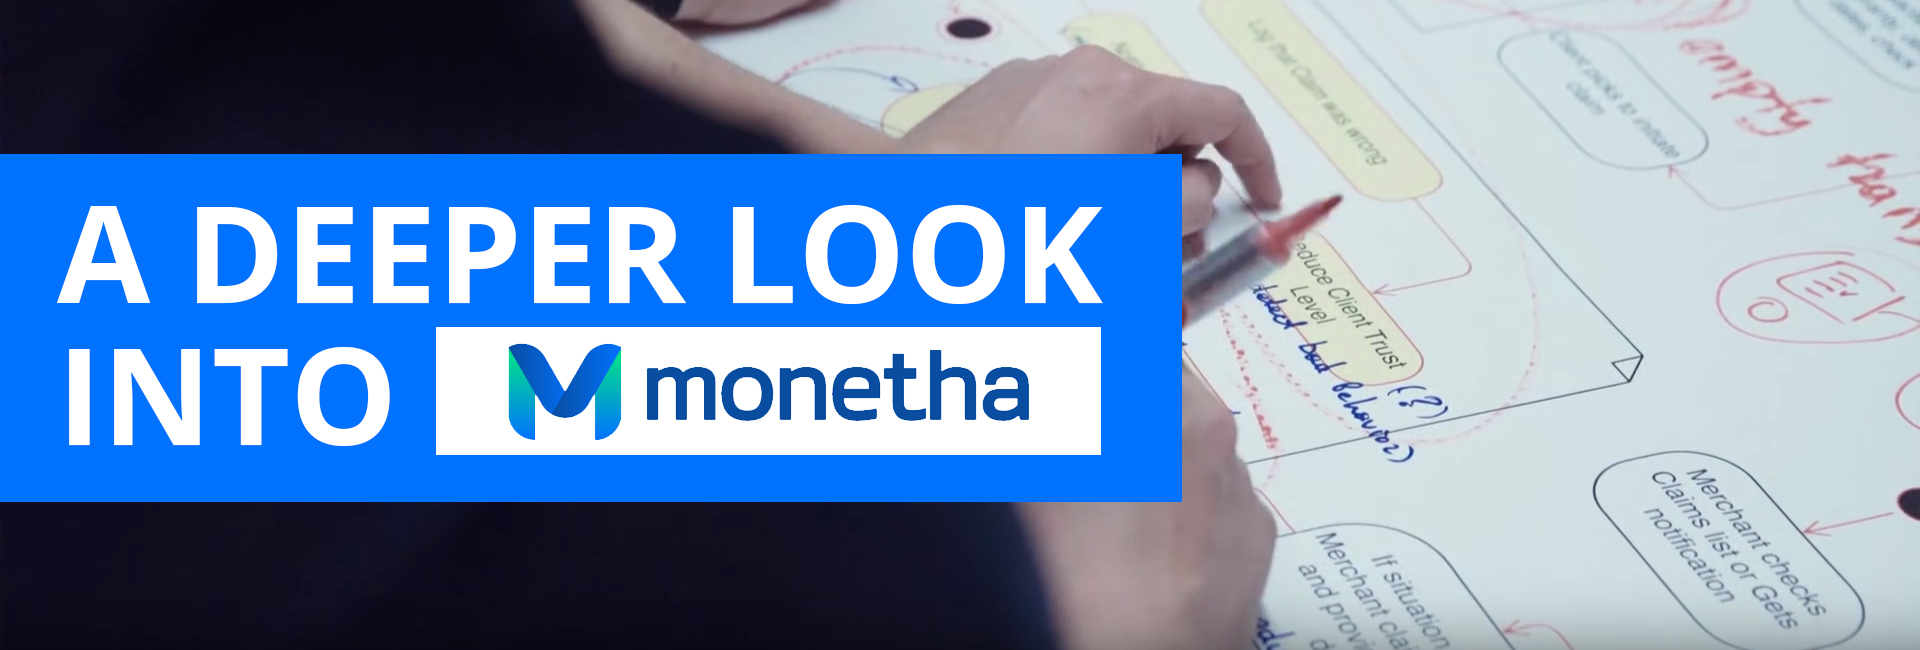 A Deeper Look into Monetha